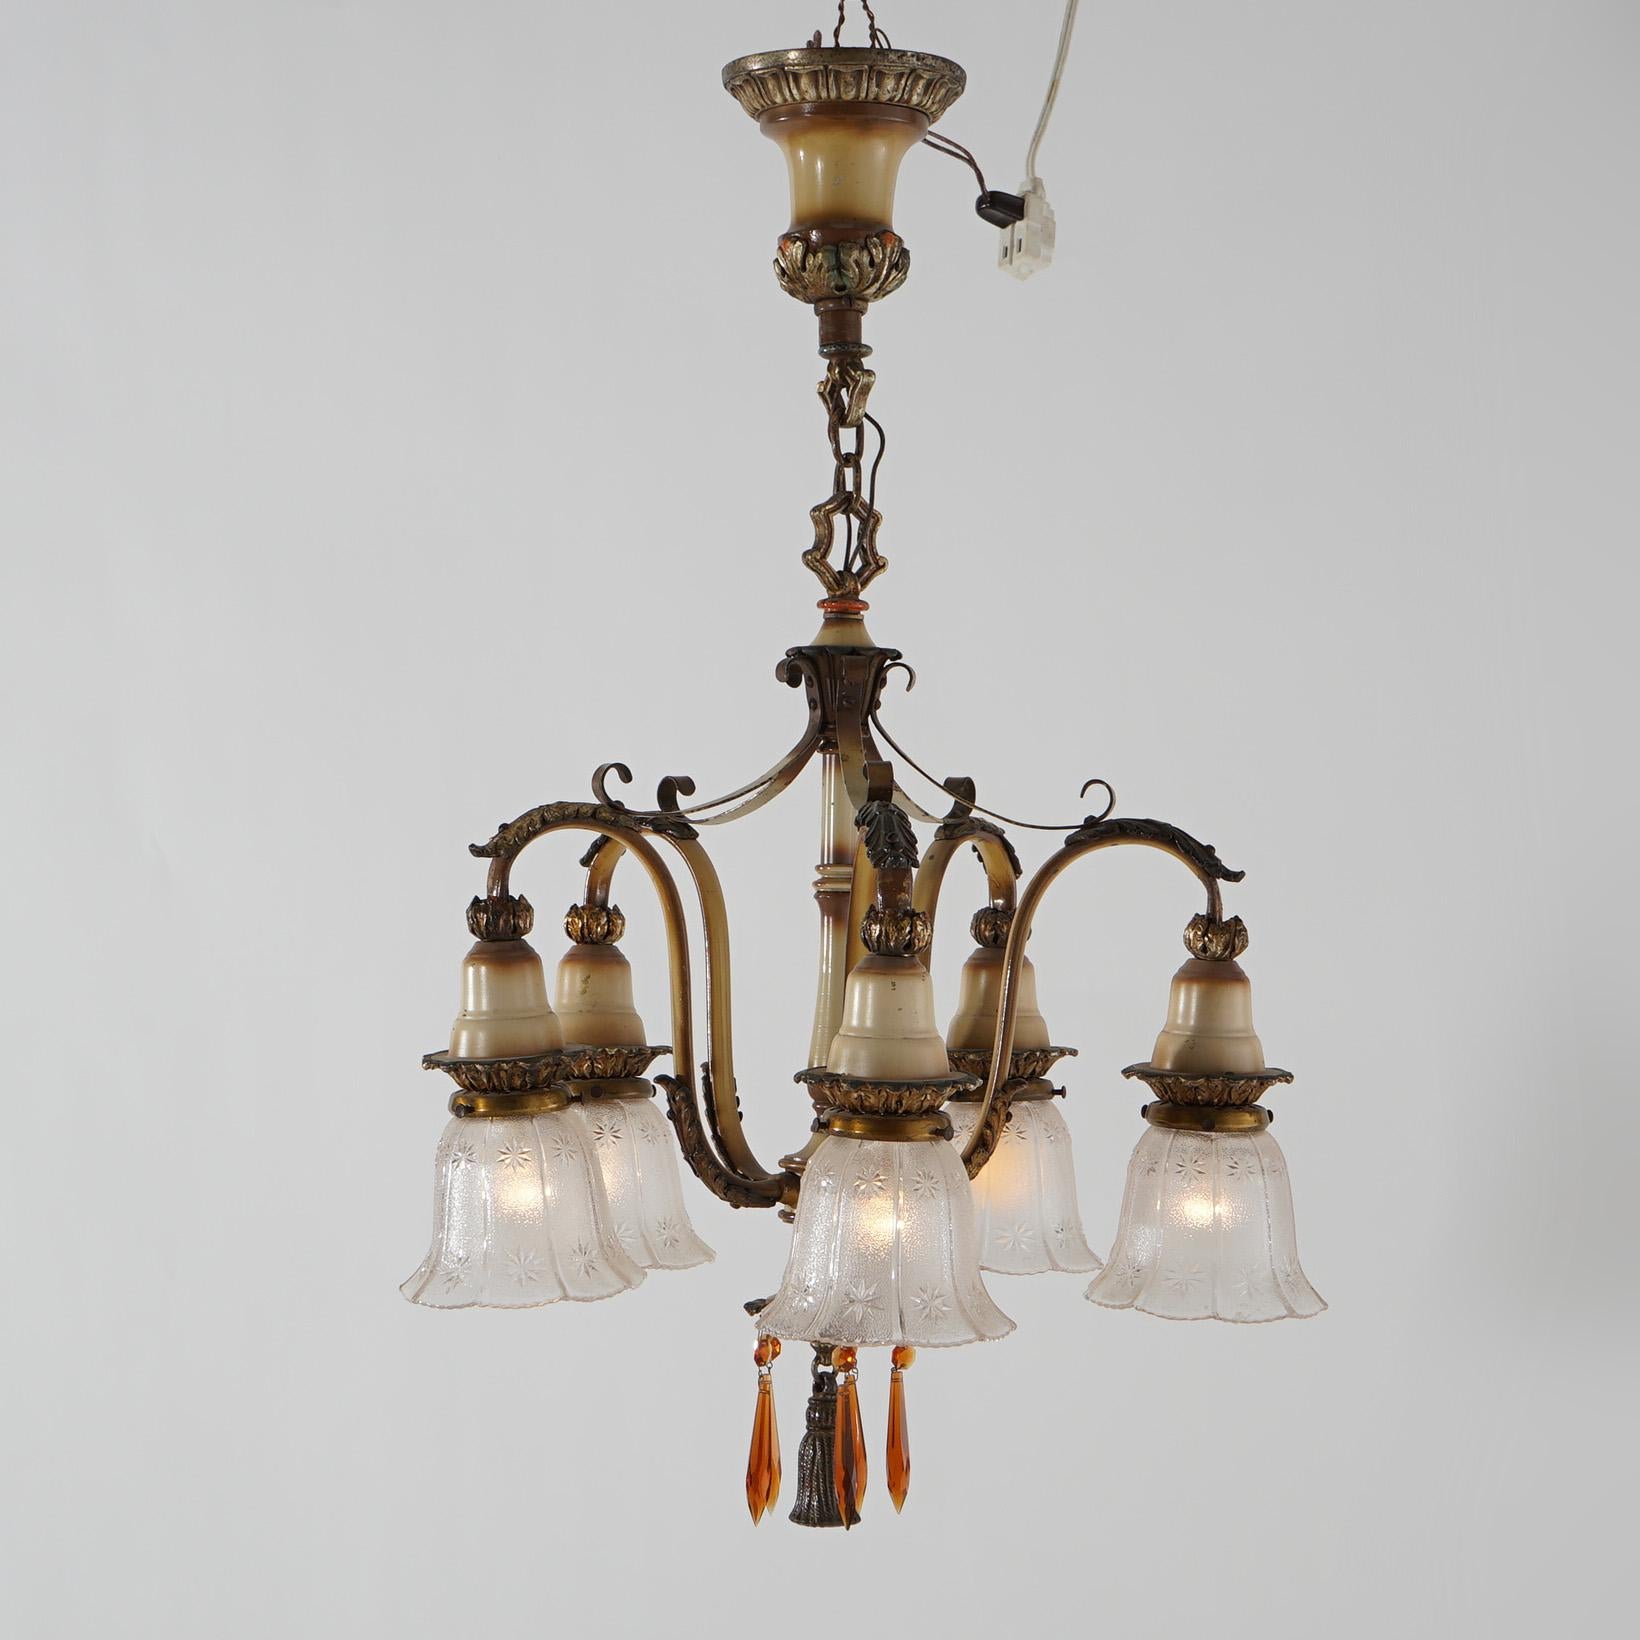 American Antique Arts & Crafts Gilt & Polychromed Metal Five Light Hanging Fixture, c1920 For Sale